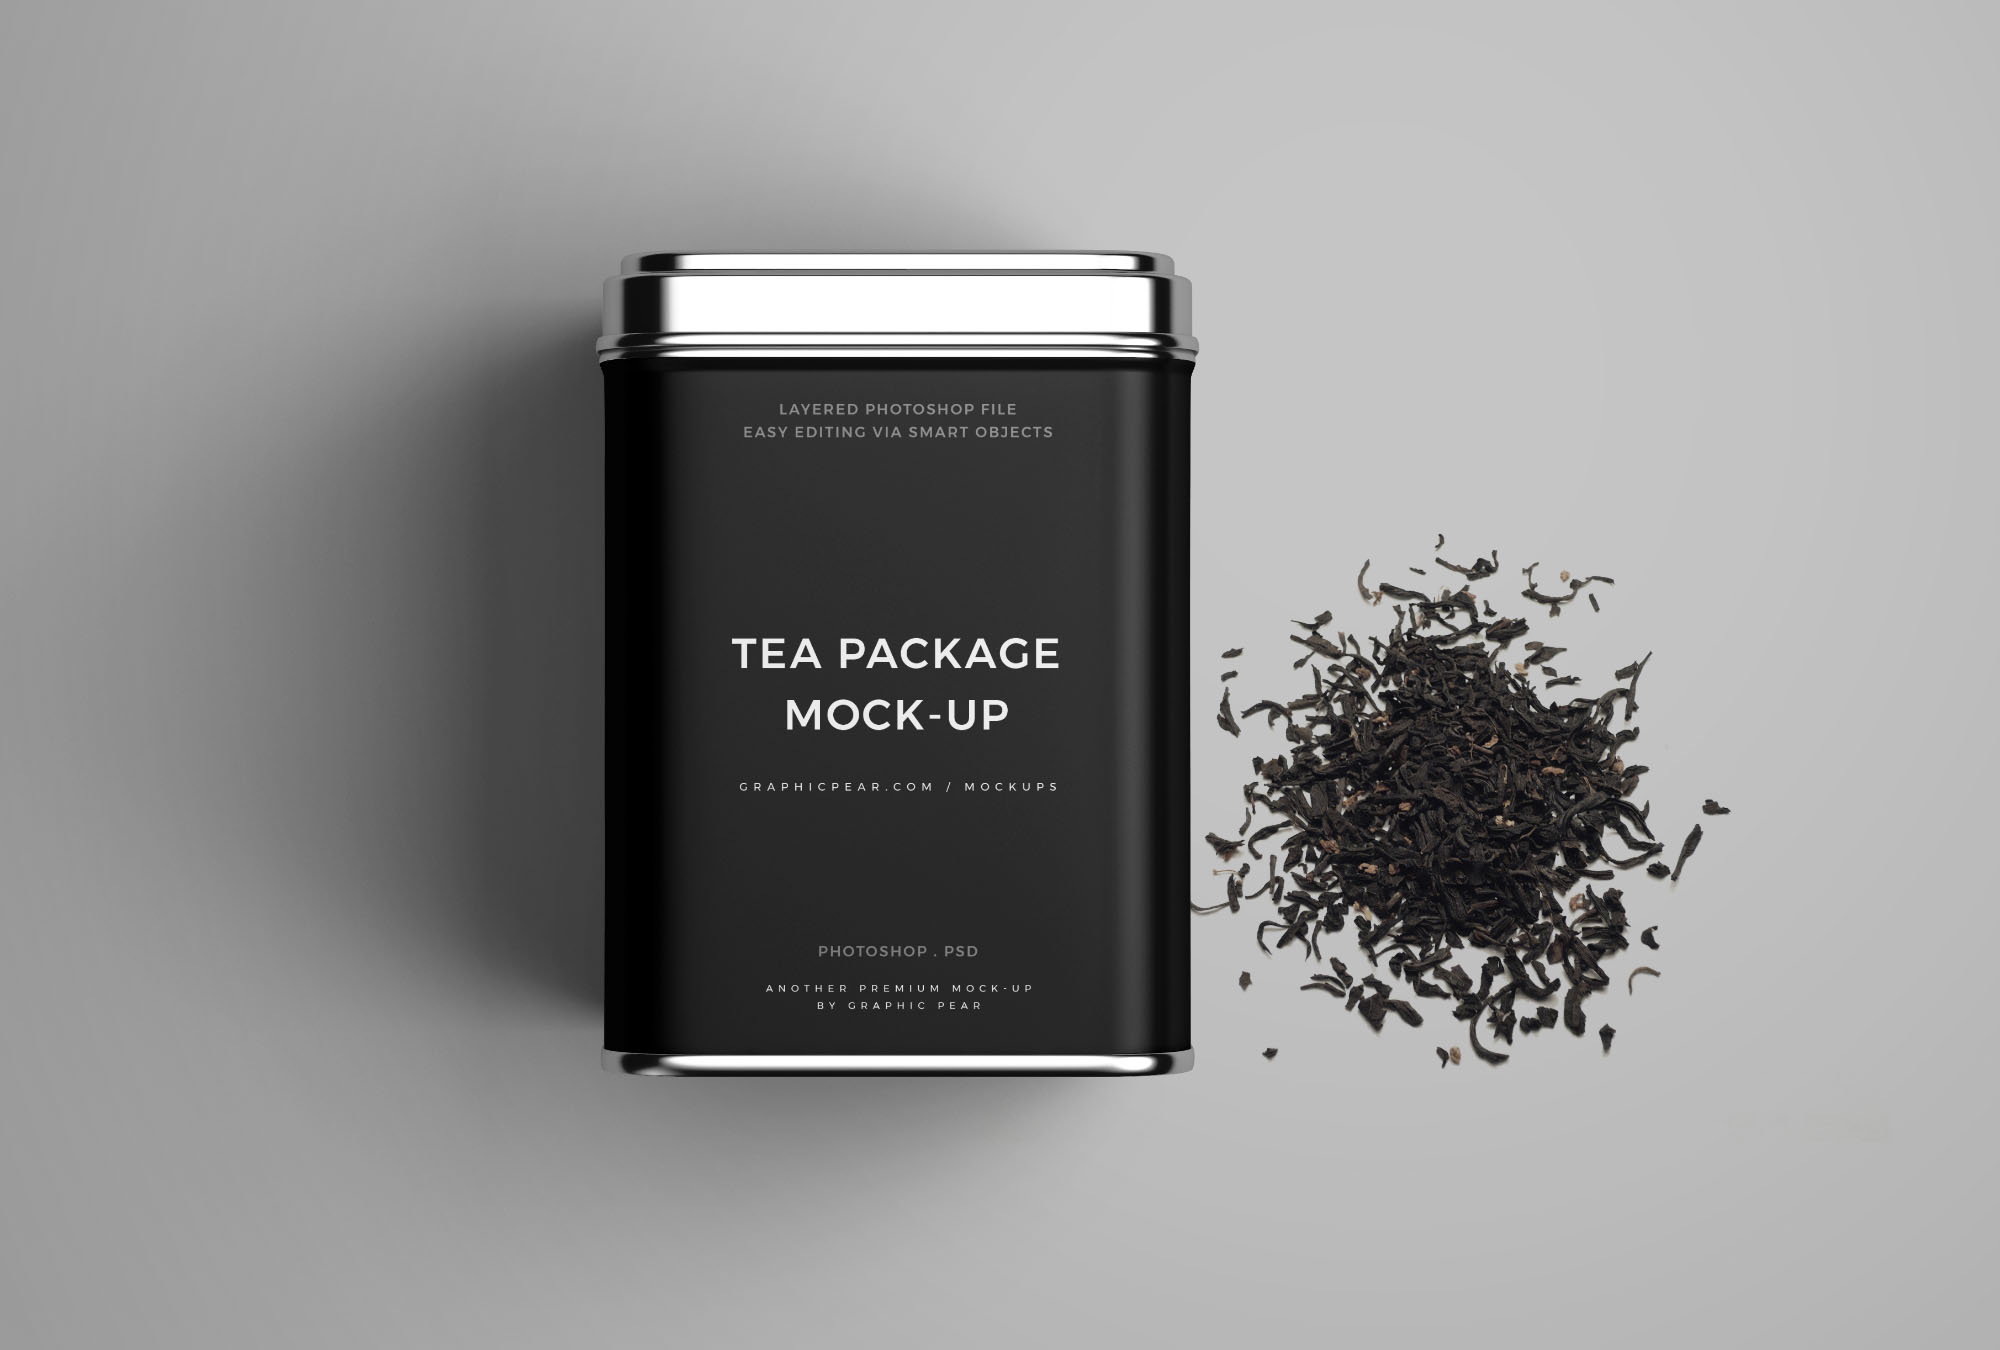 茶叶铁盒包装设计效果样机 Tea Package Mockup插图(9)